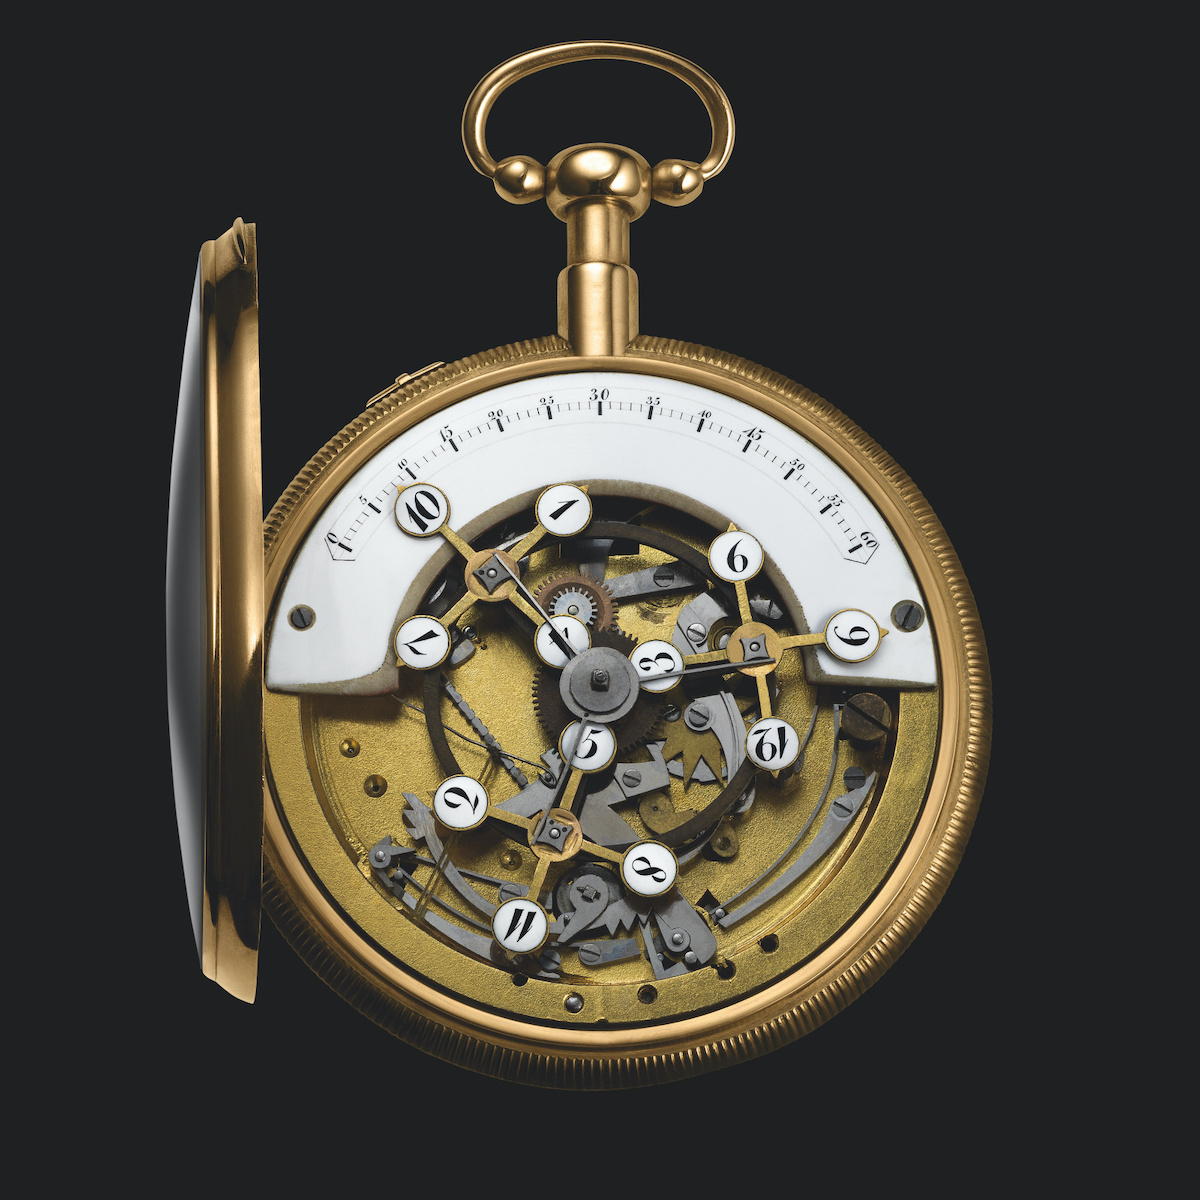 Audemars Piguet Heritage Pocket watch